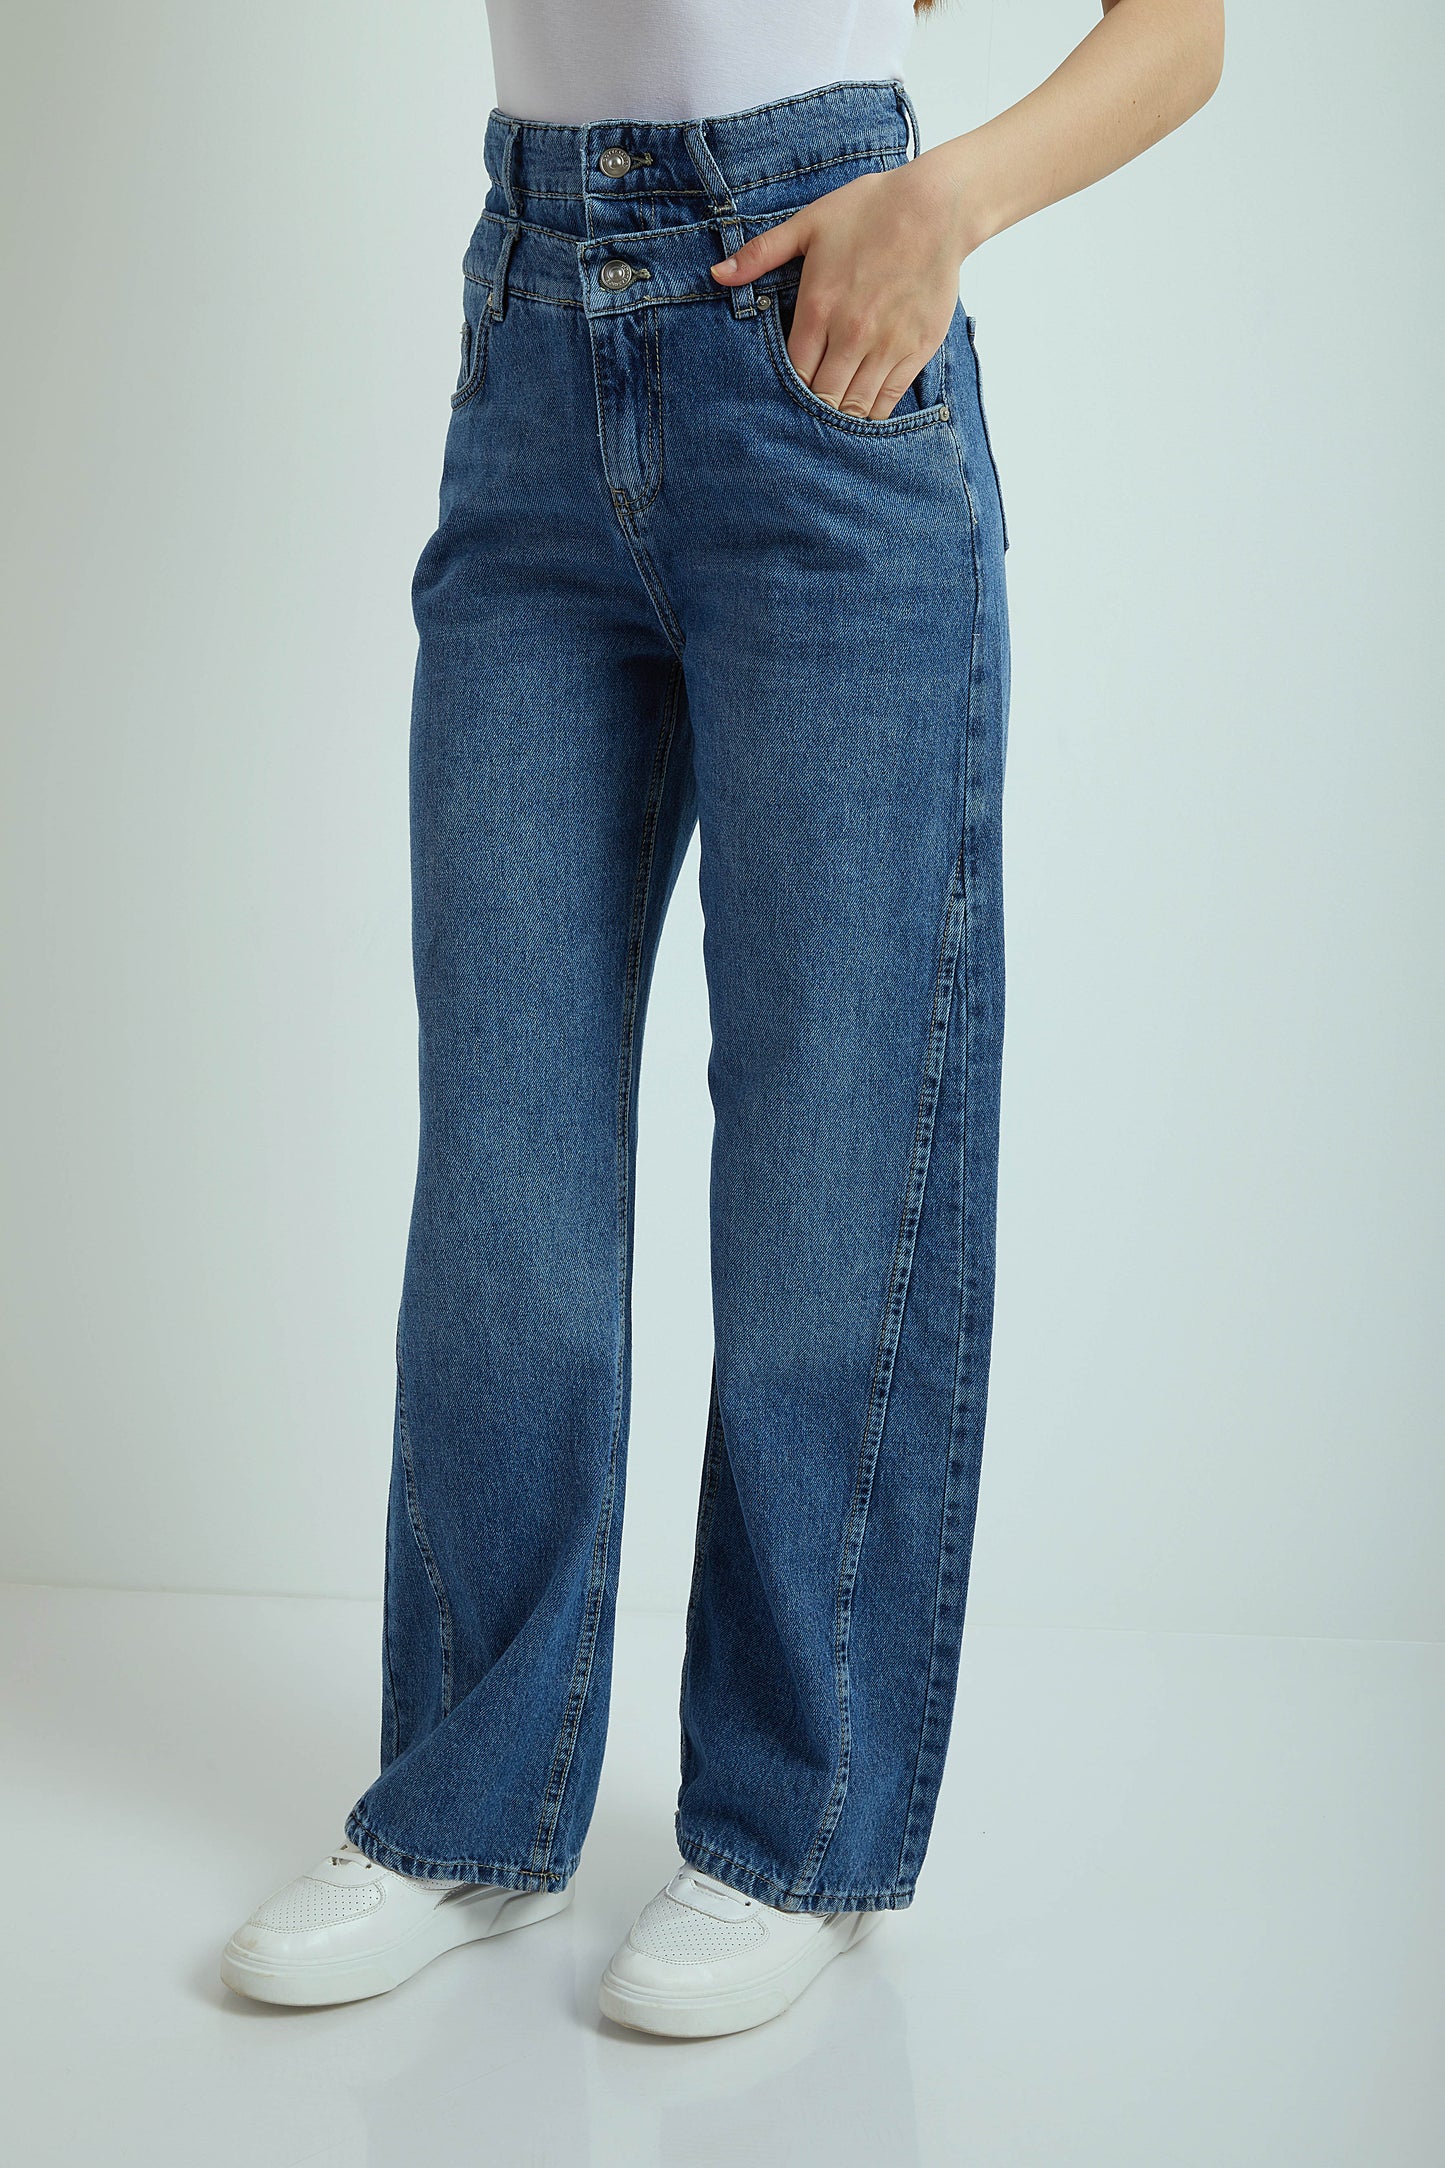 Jeans - Double Waist ( Wide Leg )